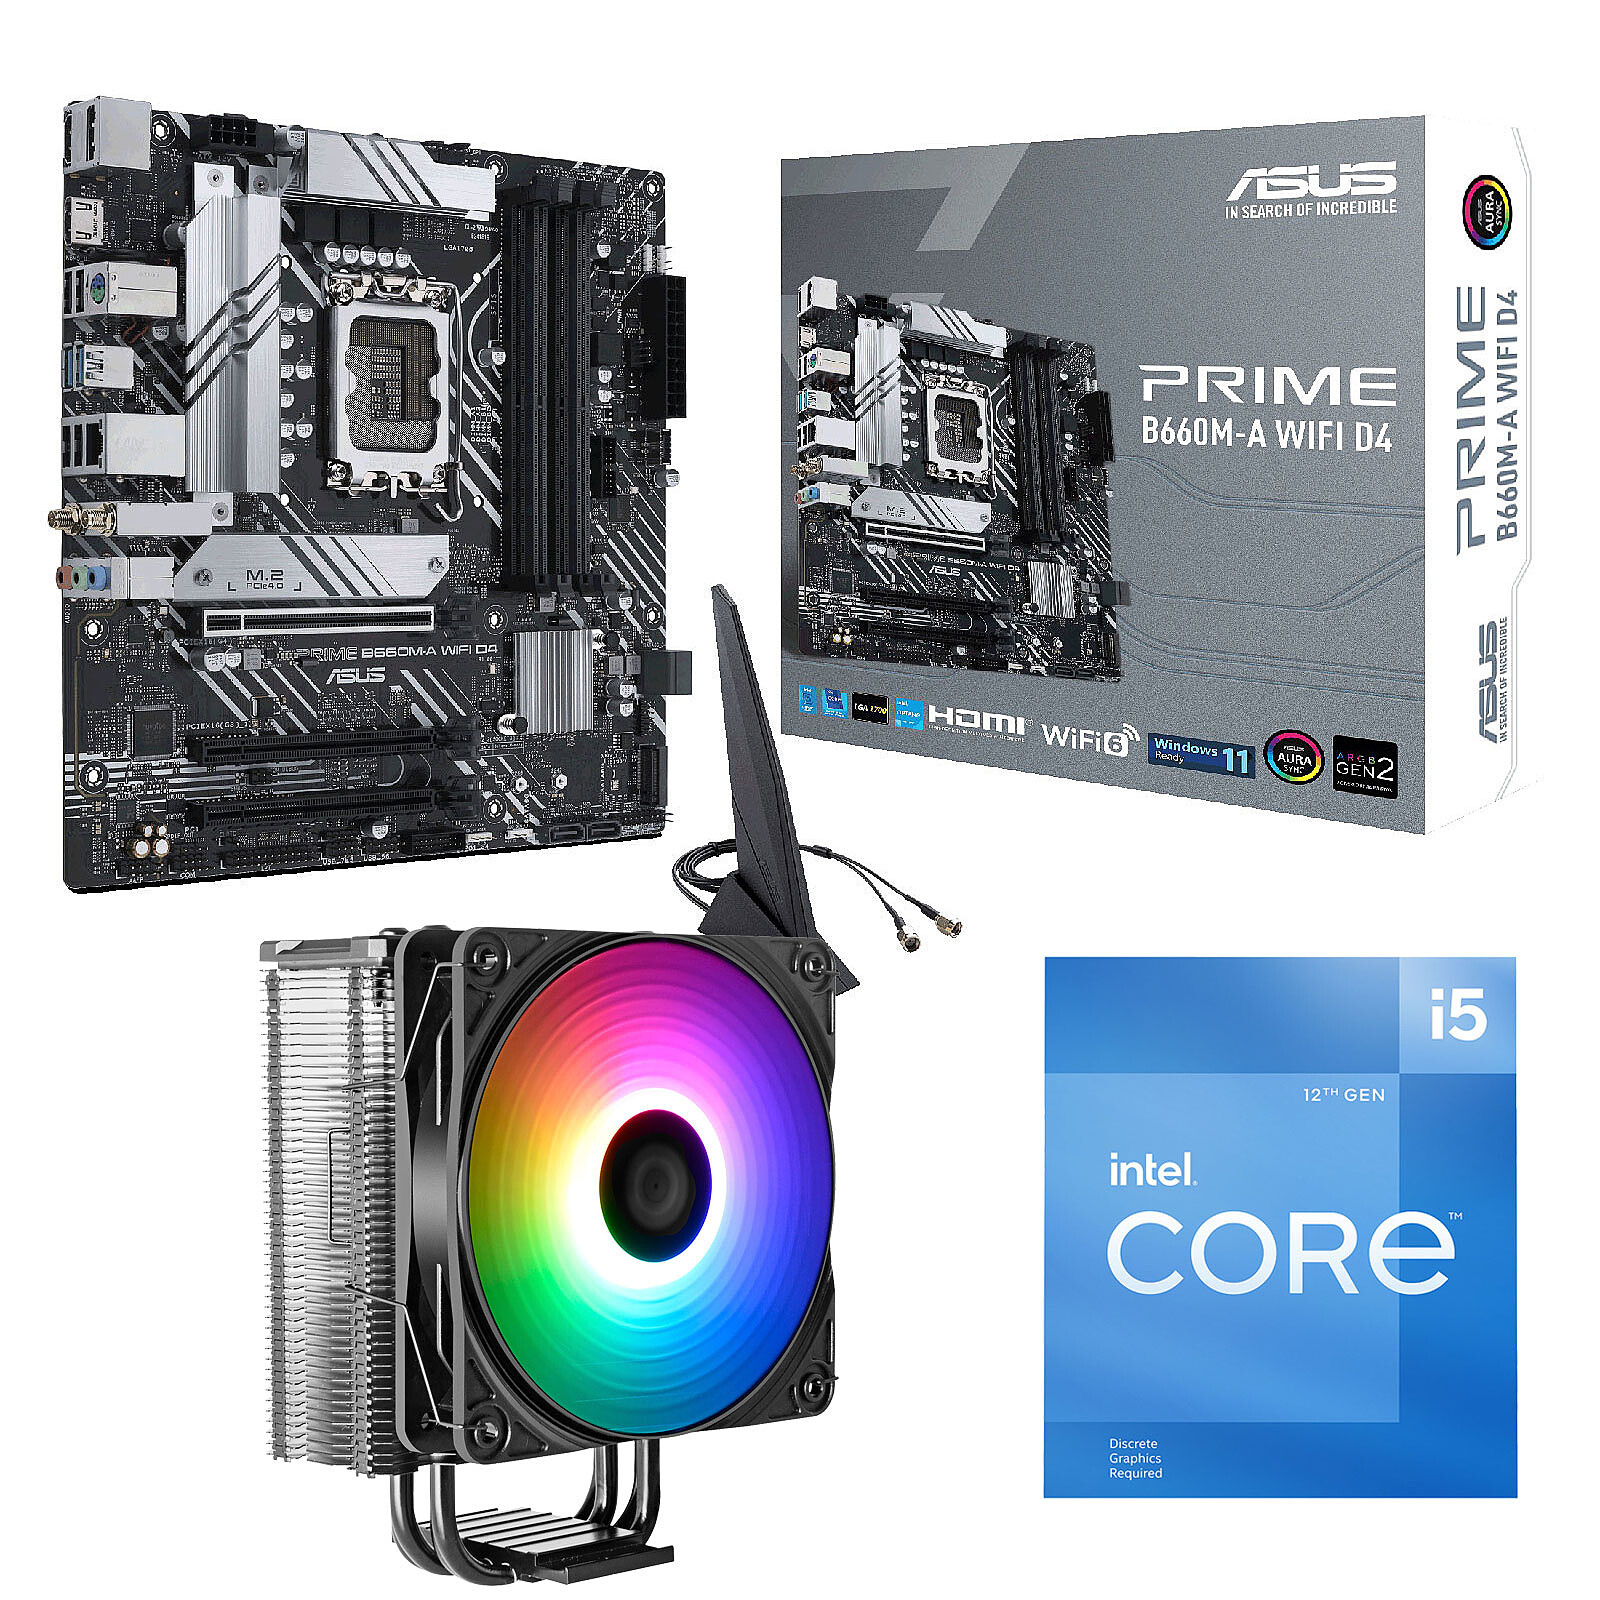 ASUS PRIME B660M-A WIFI D4 Intel Core i5-12400F PC Upgrade Bundle 